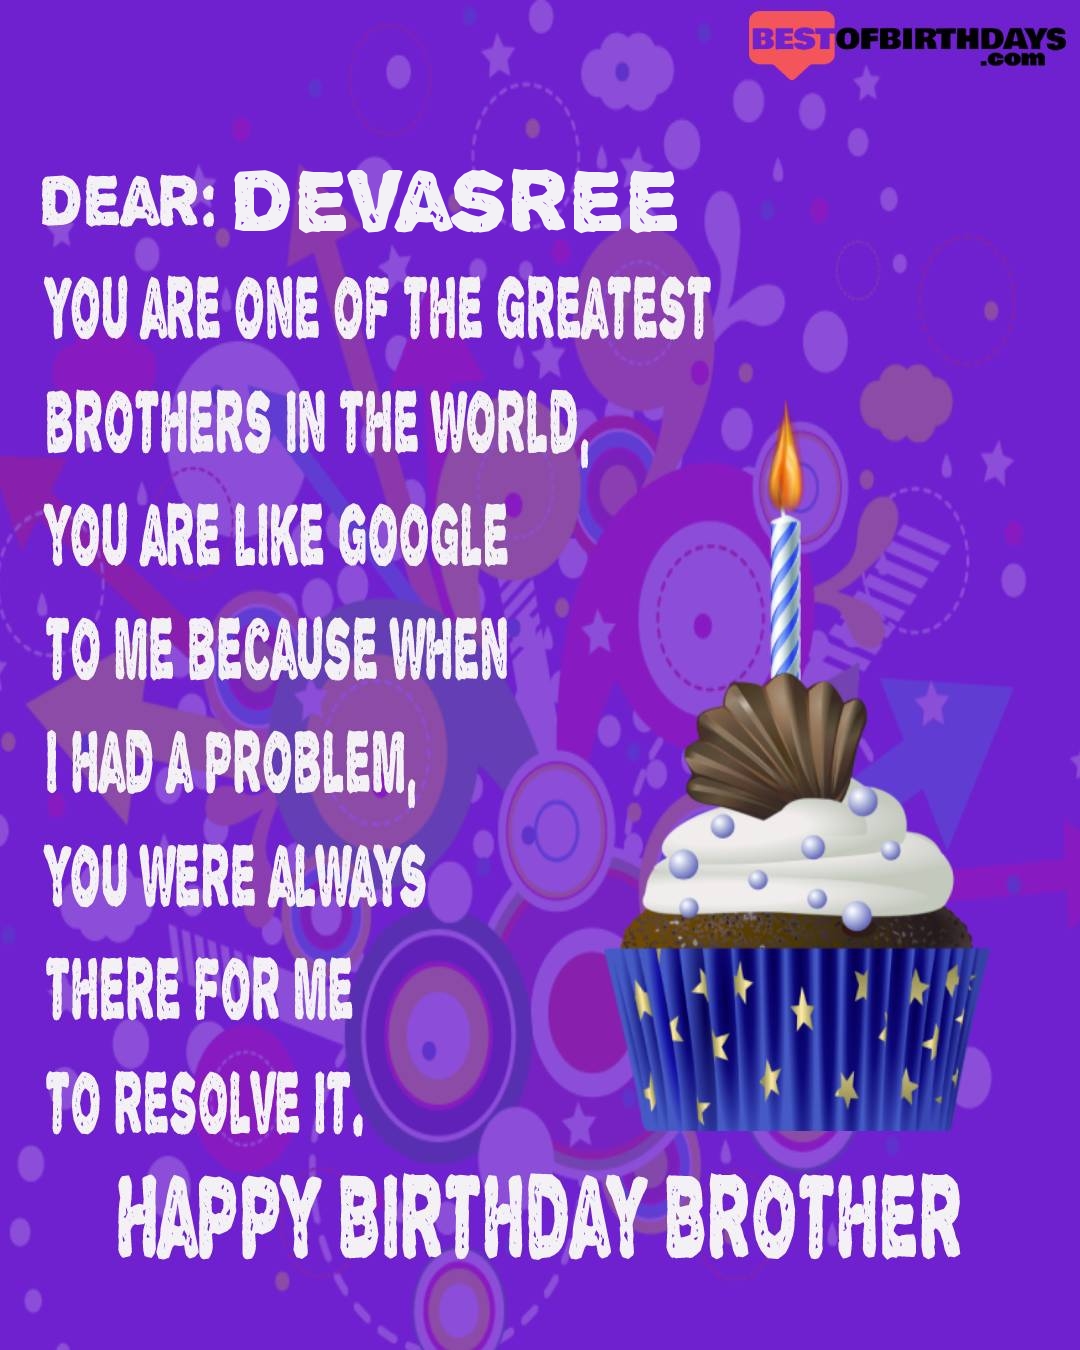 Happy birthday devasree bhai brother bro